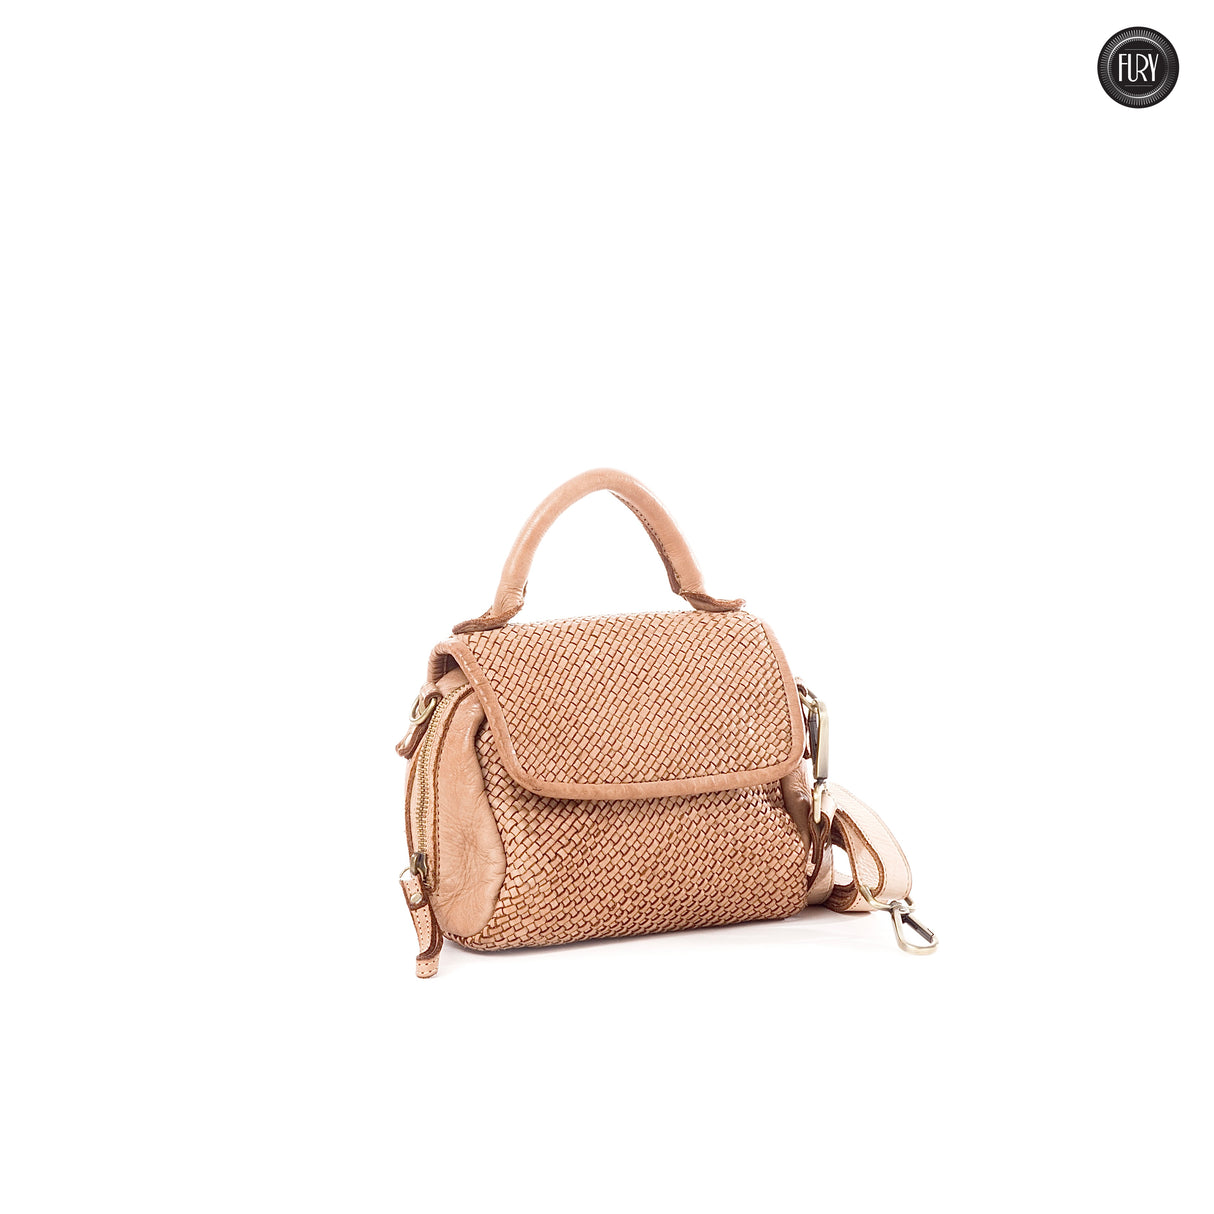 Siena handbag in woven leather